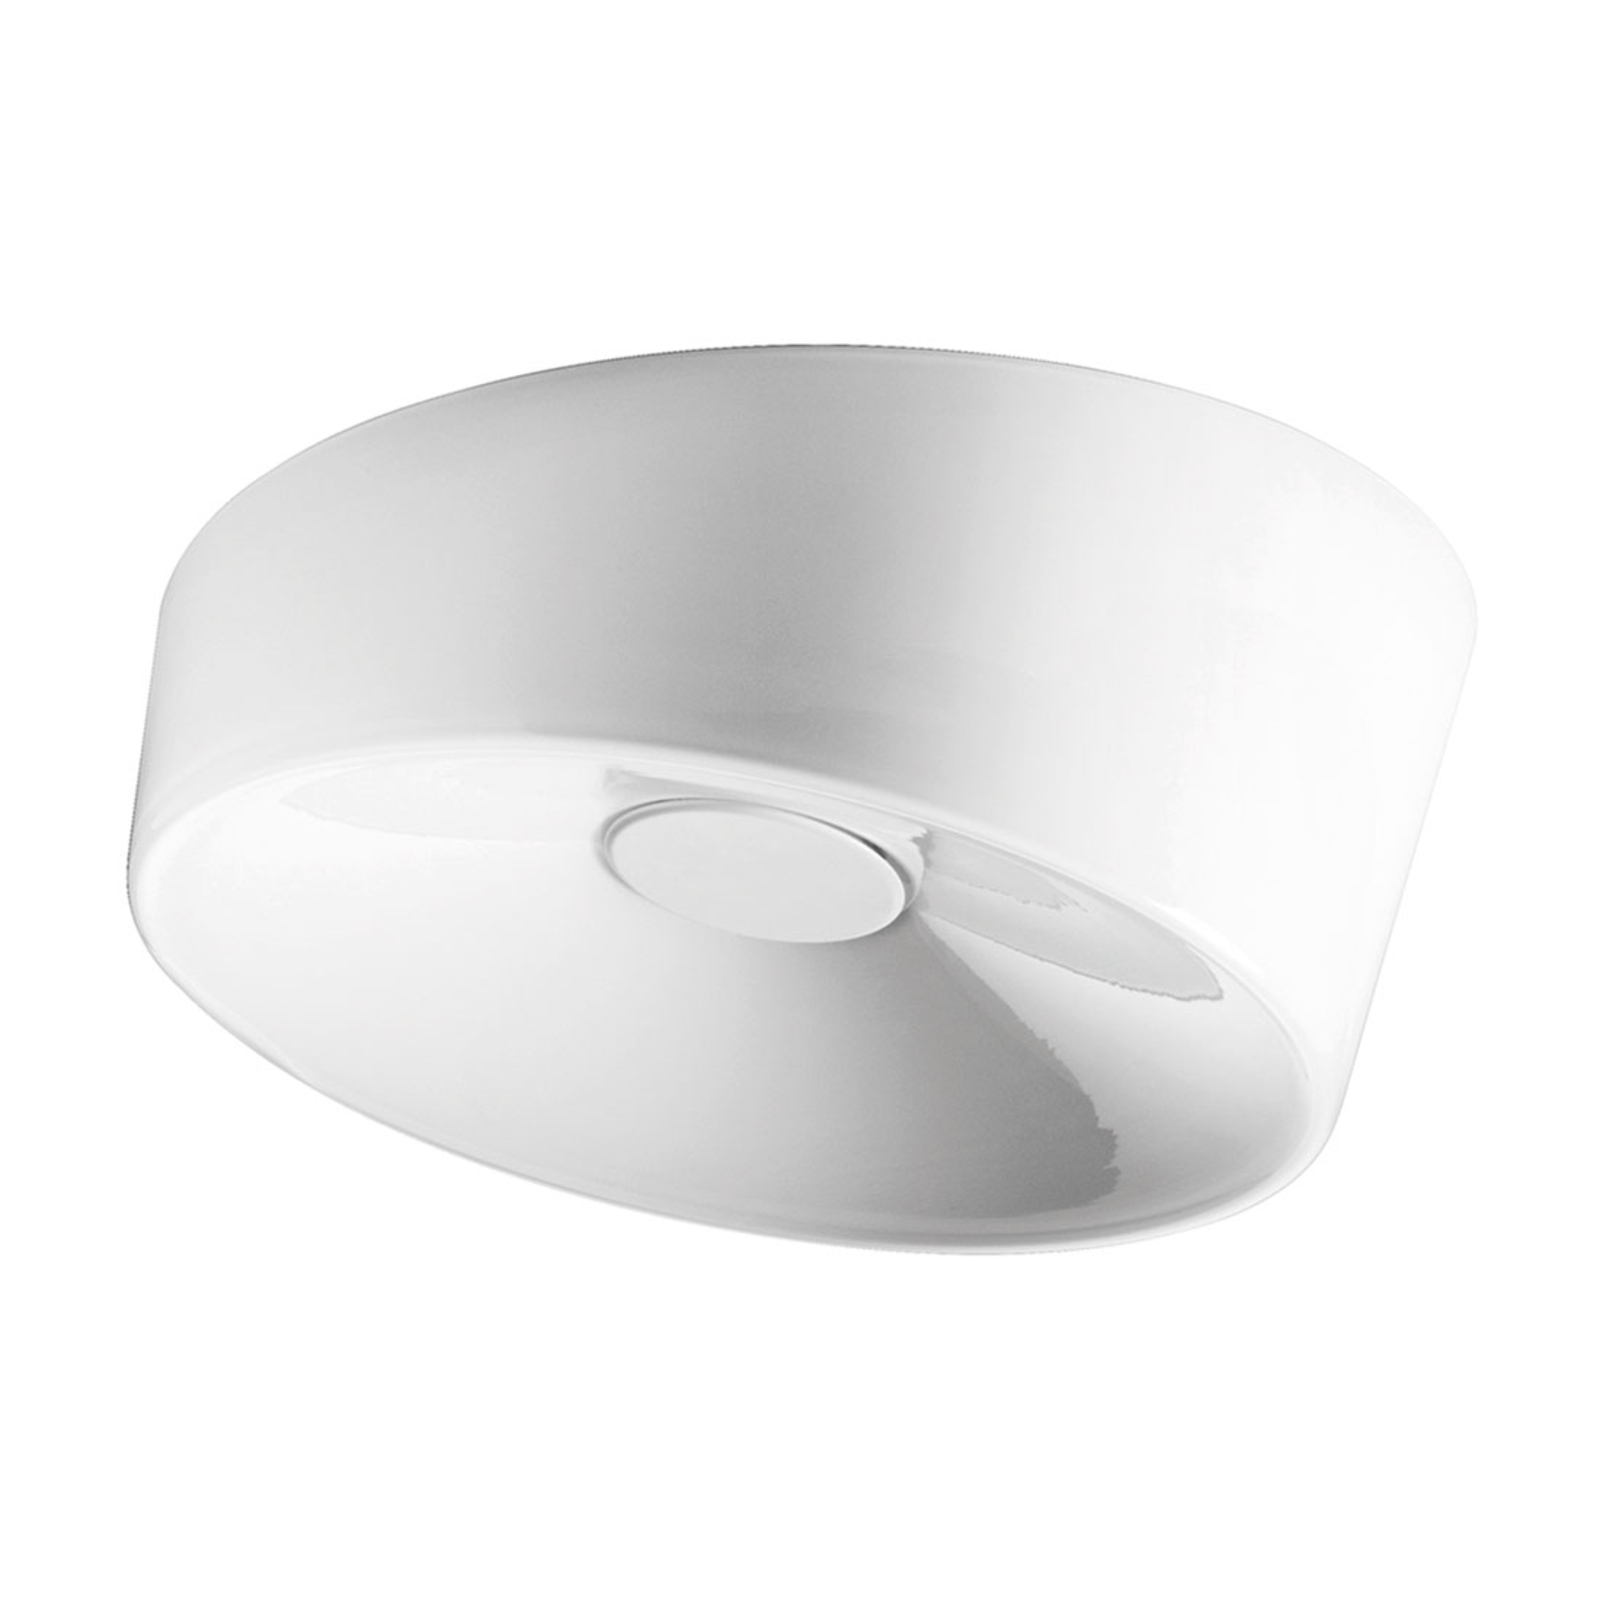 Foscarini Lumiere G9 ceiling light, Ø 34 cm, white